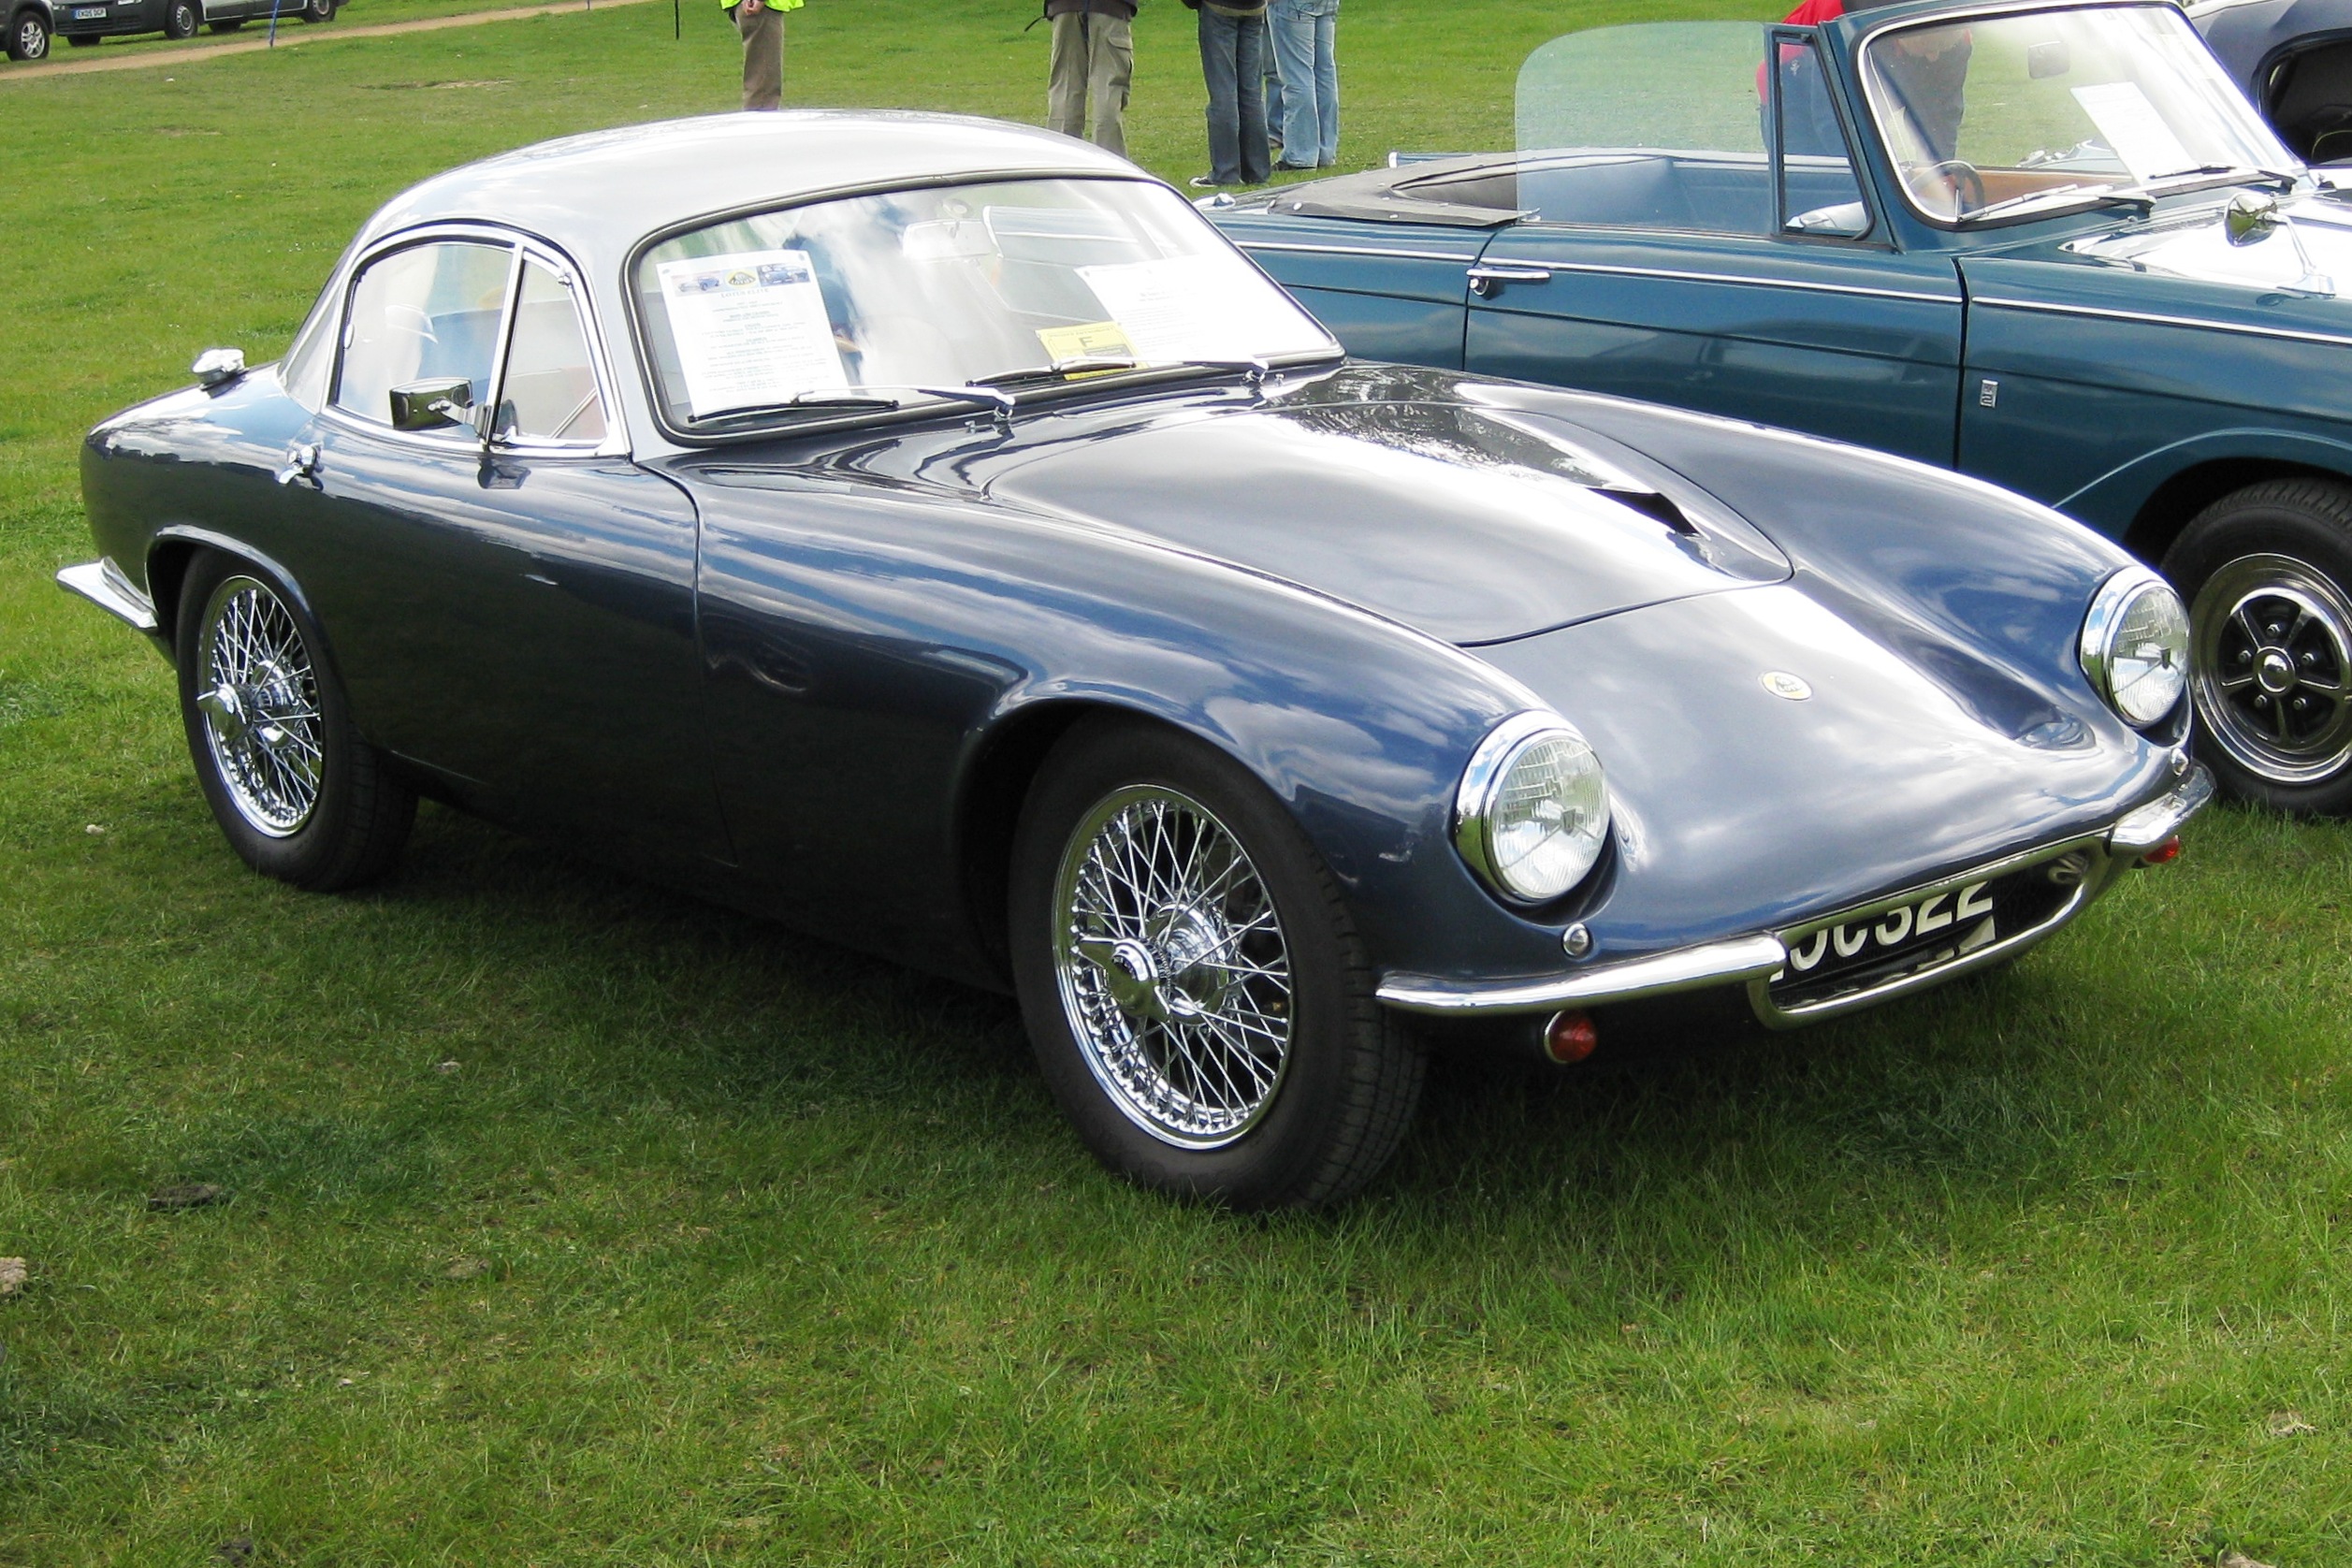 File:Lotus Elite Reg 1962 1460 cc.JPG - Wikimedia Commons